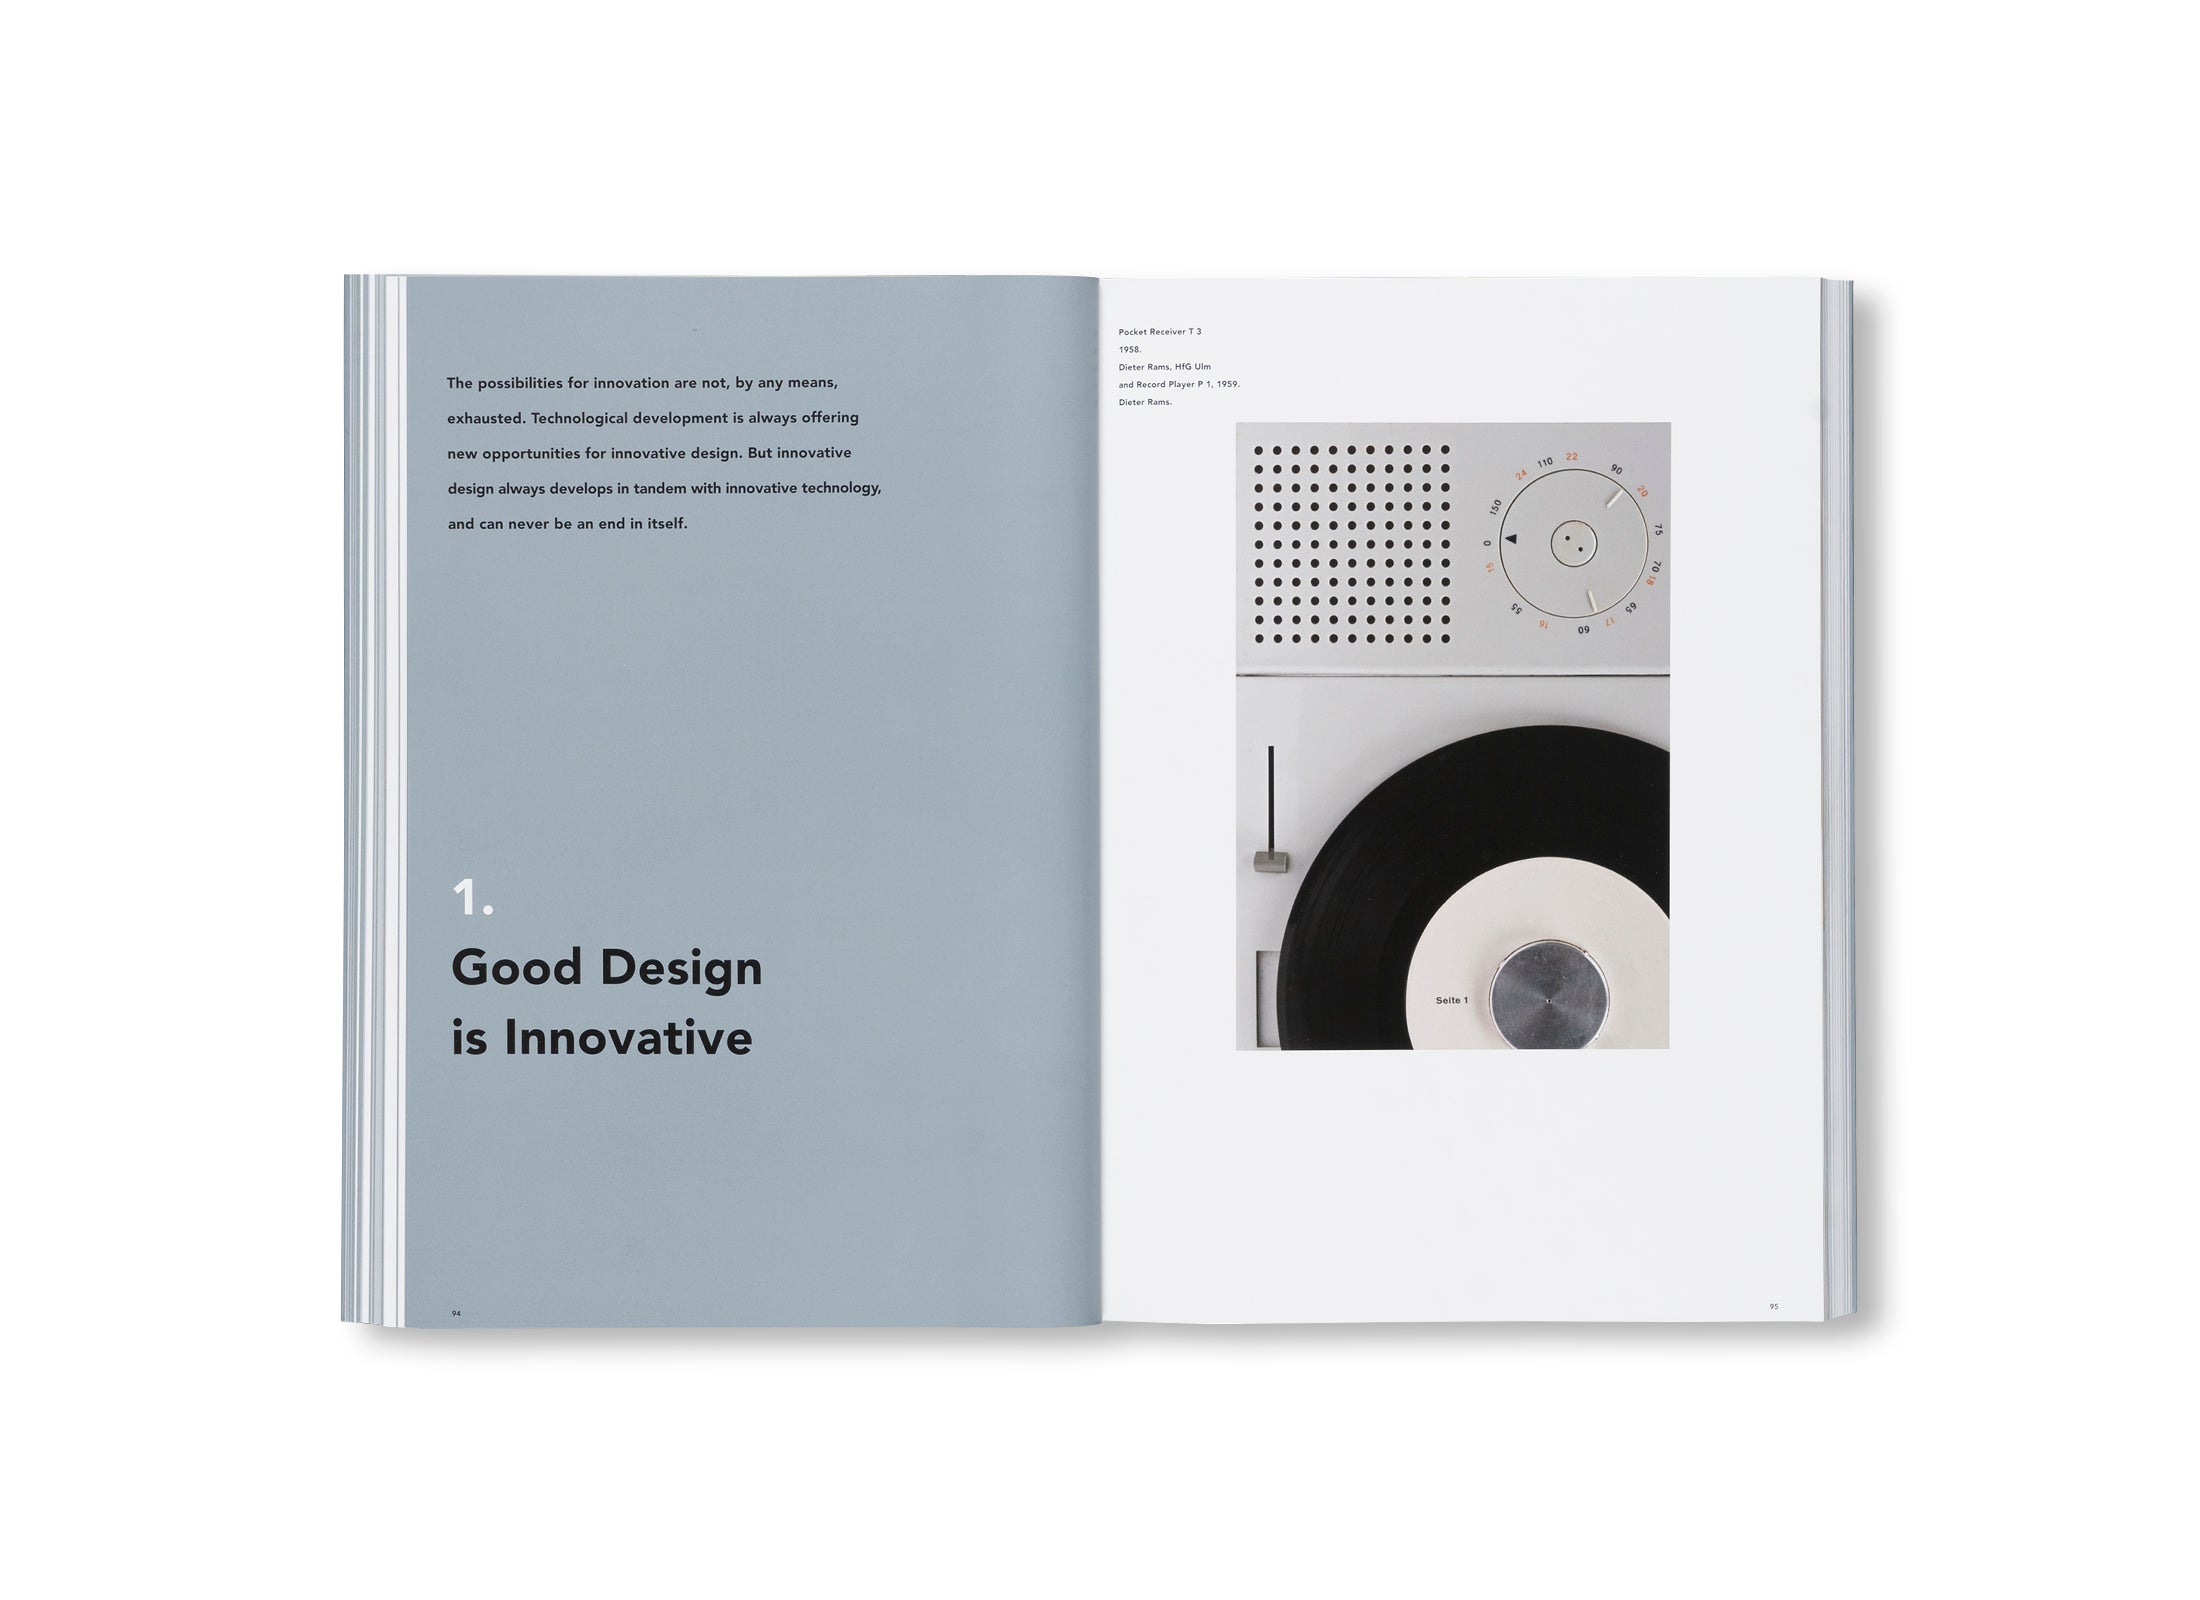 TEN PRINCIPLES FOR GOOD DESIGN by Dieter Rams